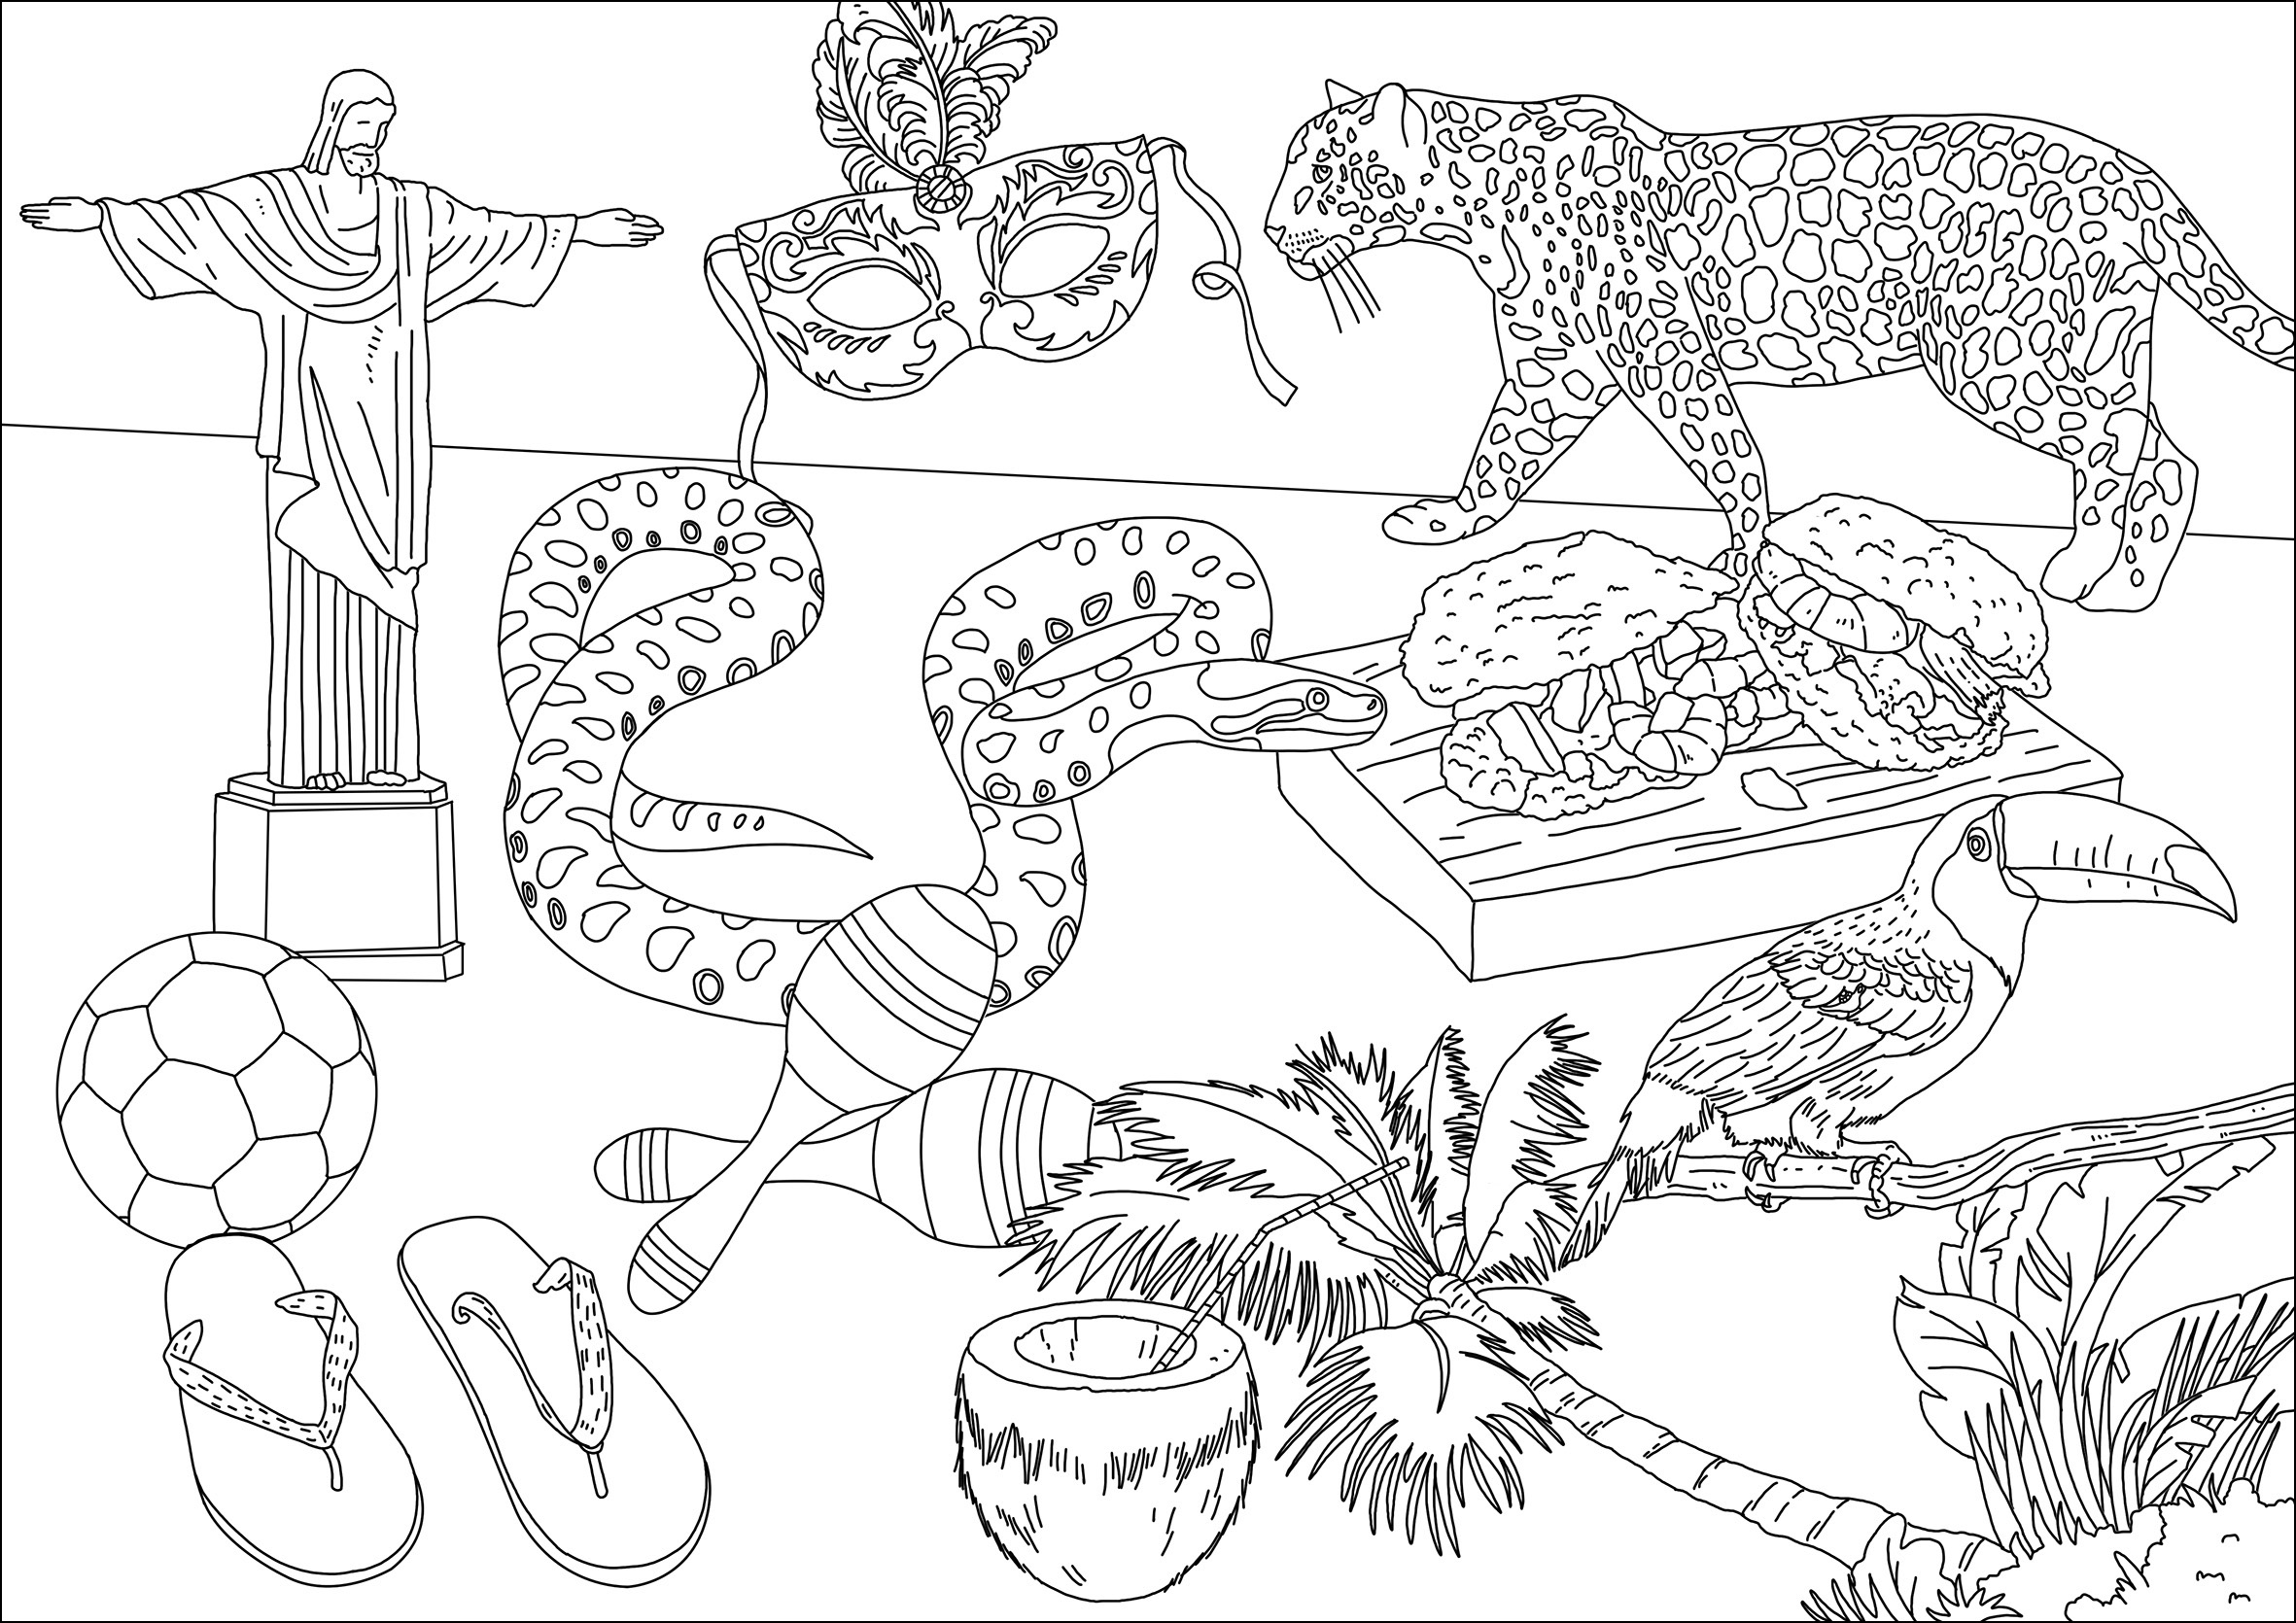 Various animals and symbols of Brazil, Artist : Frédéric Brogard